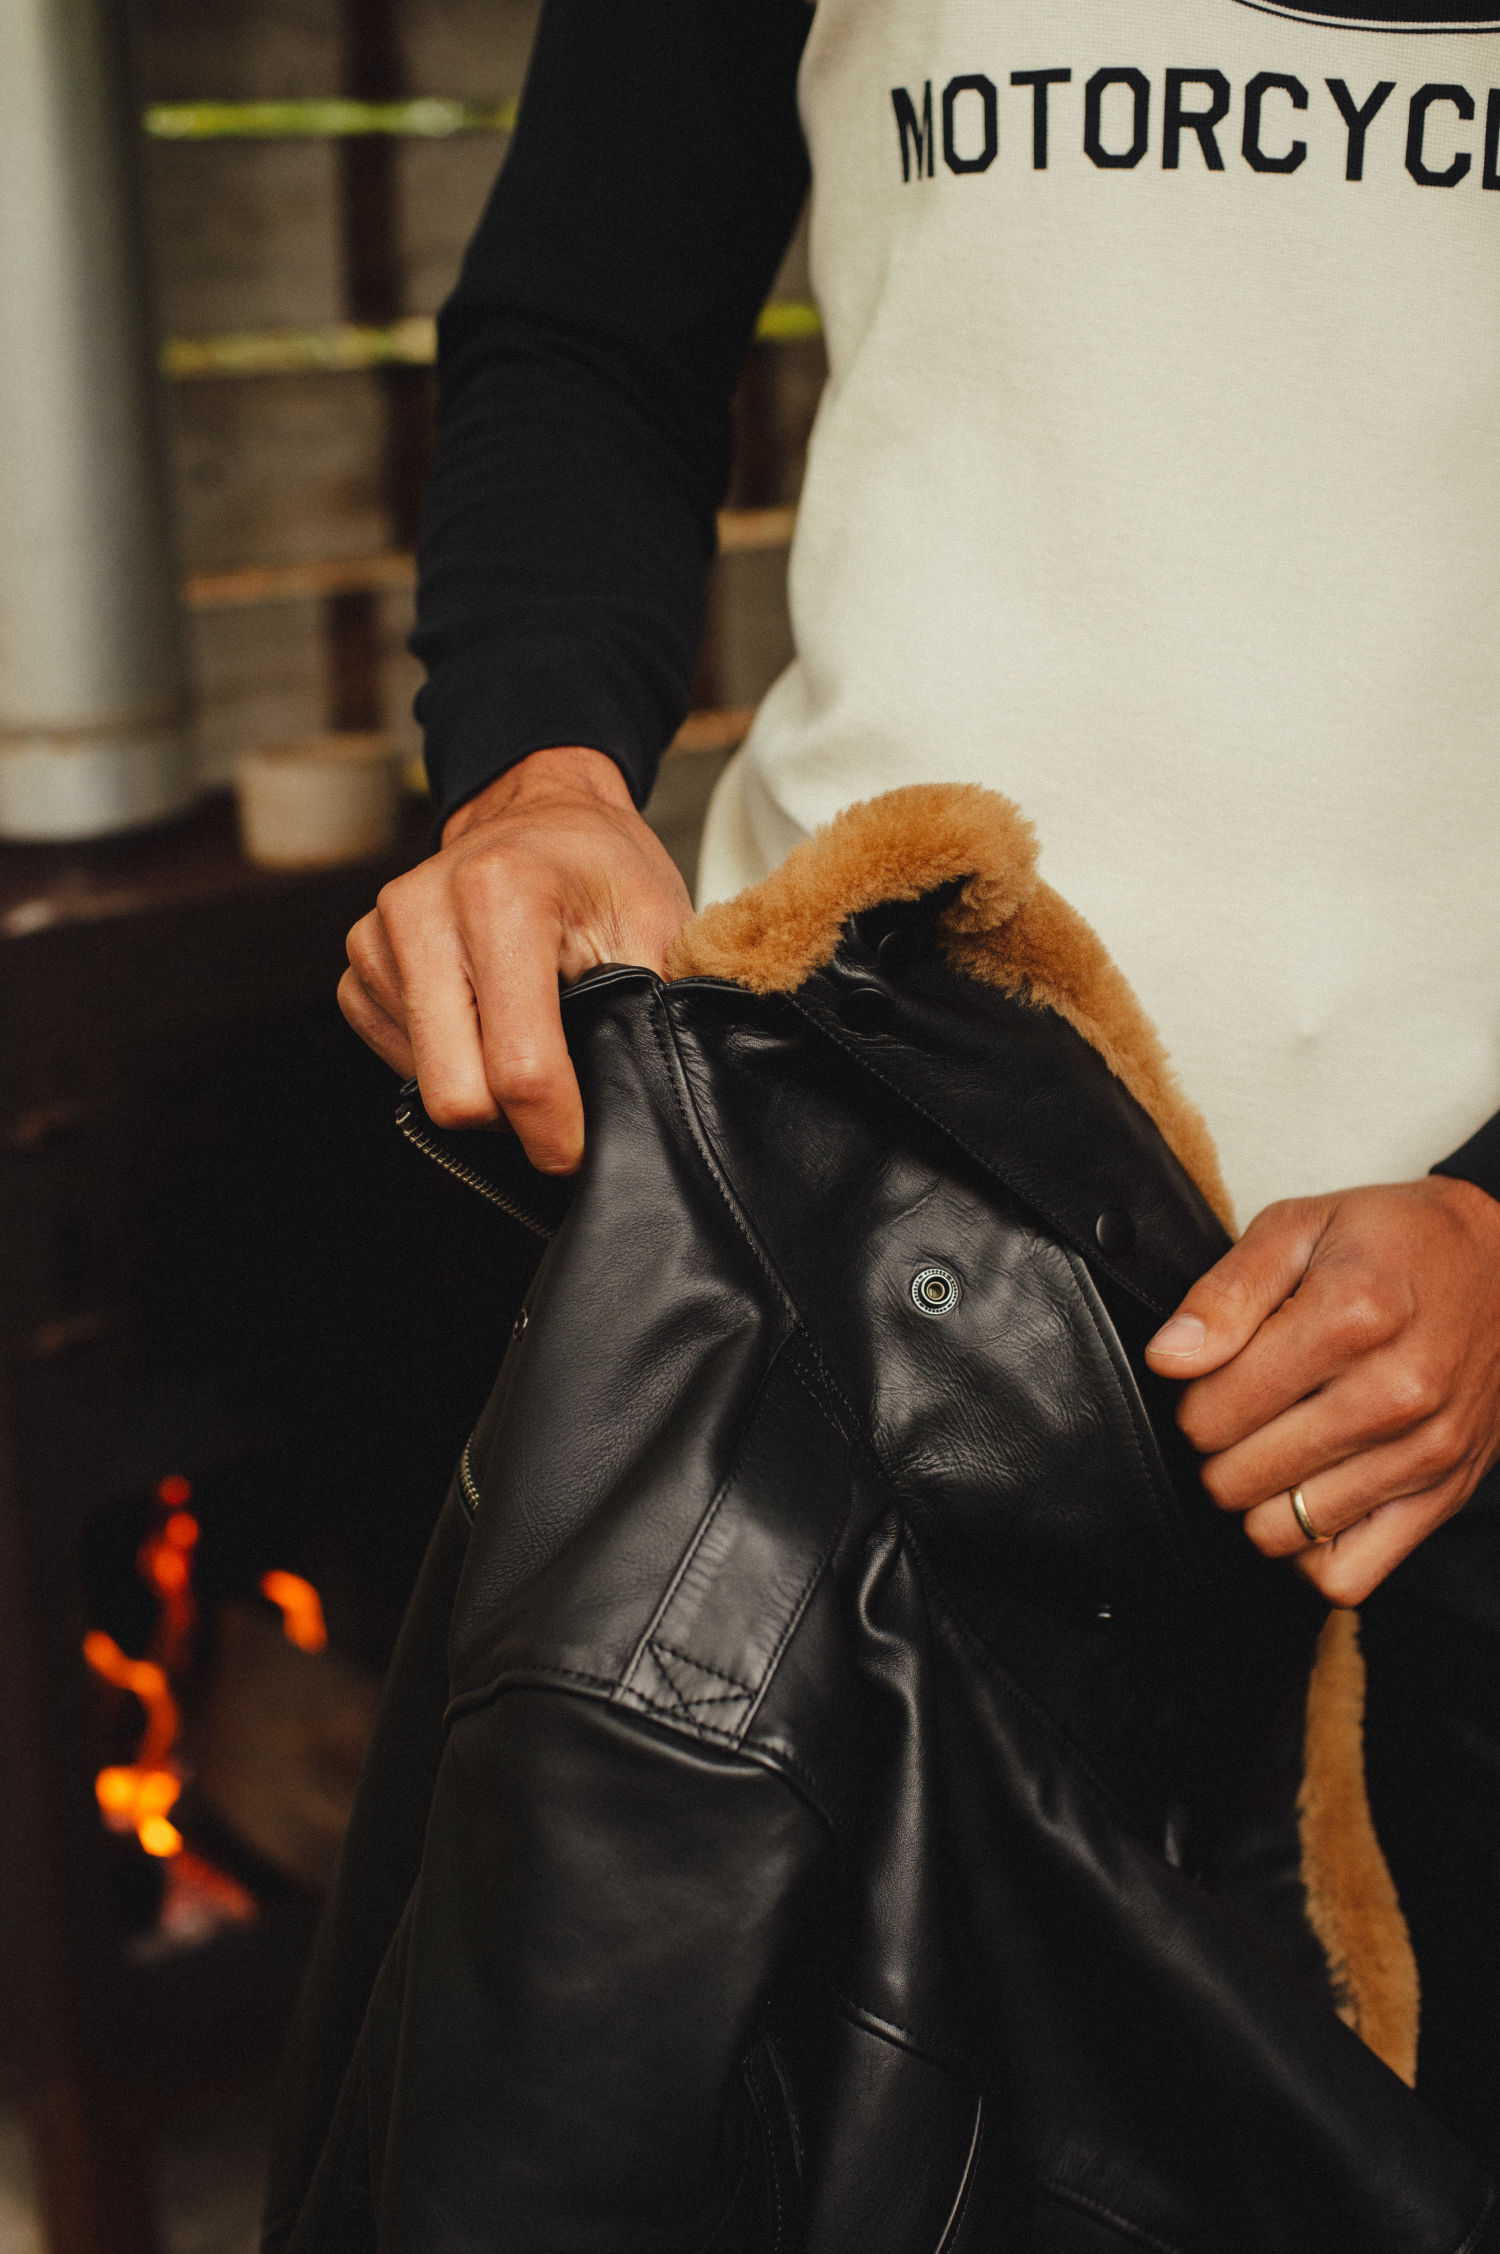 Rexford Black Leather Jacket